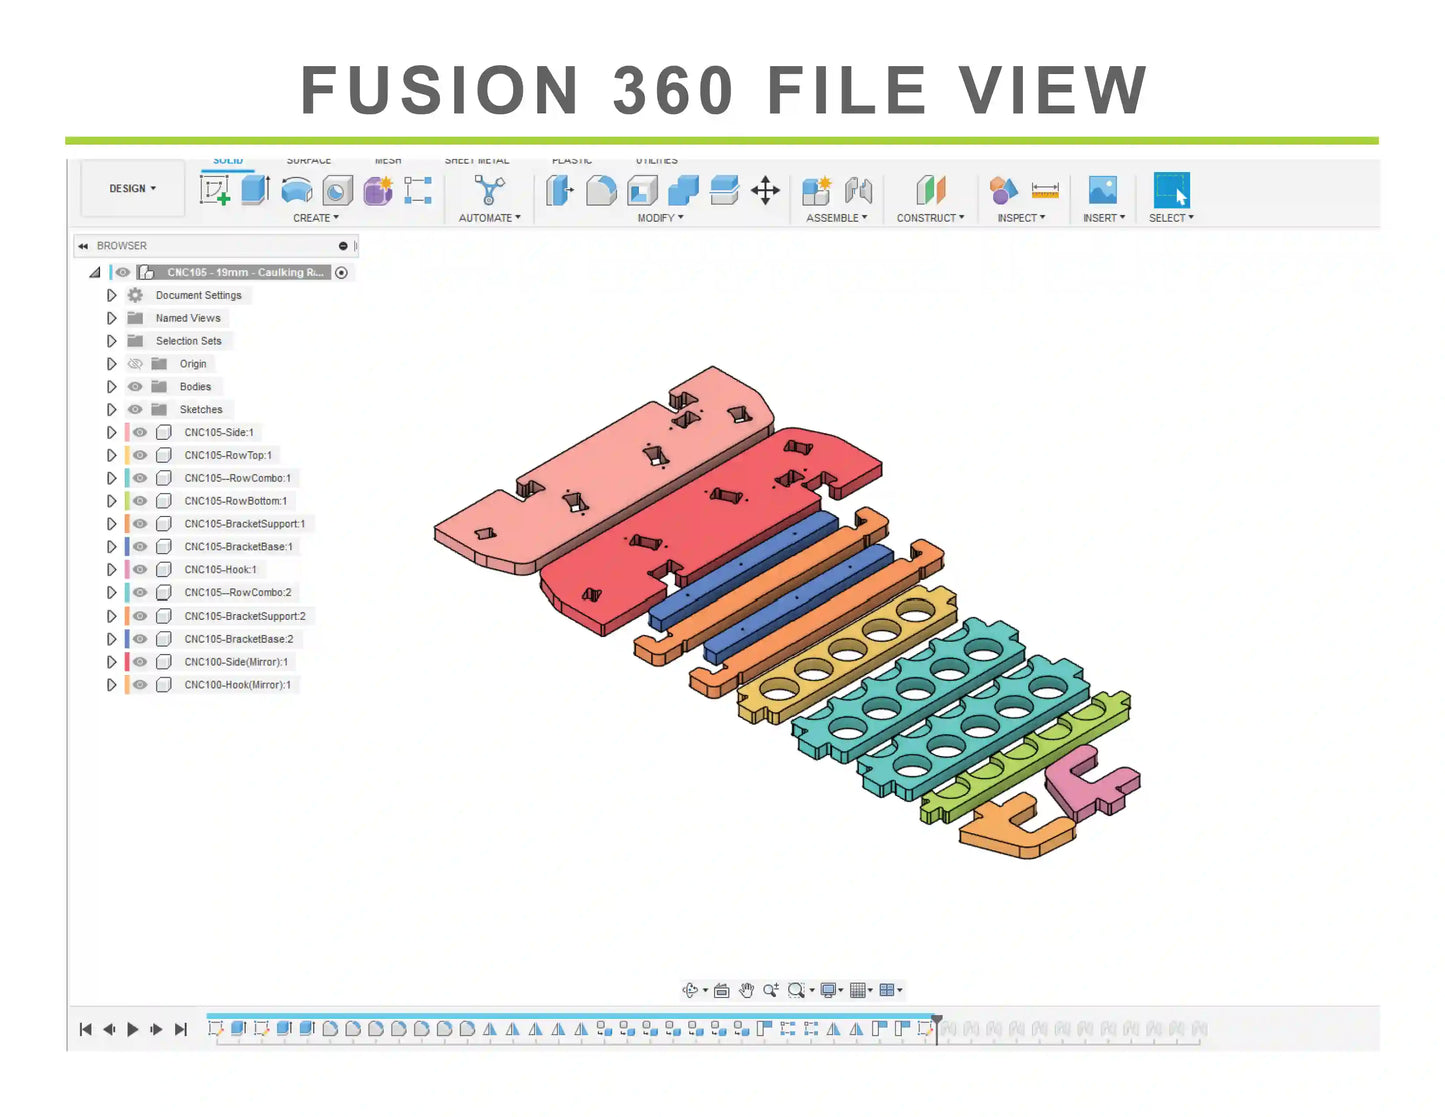 fusion 360 file 3d model of caulking tube storage organizer rack that holds 15 tubes of caulk on a workshop wall